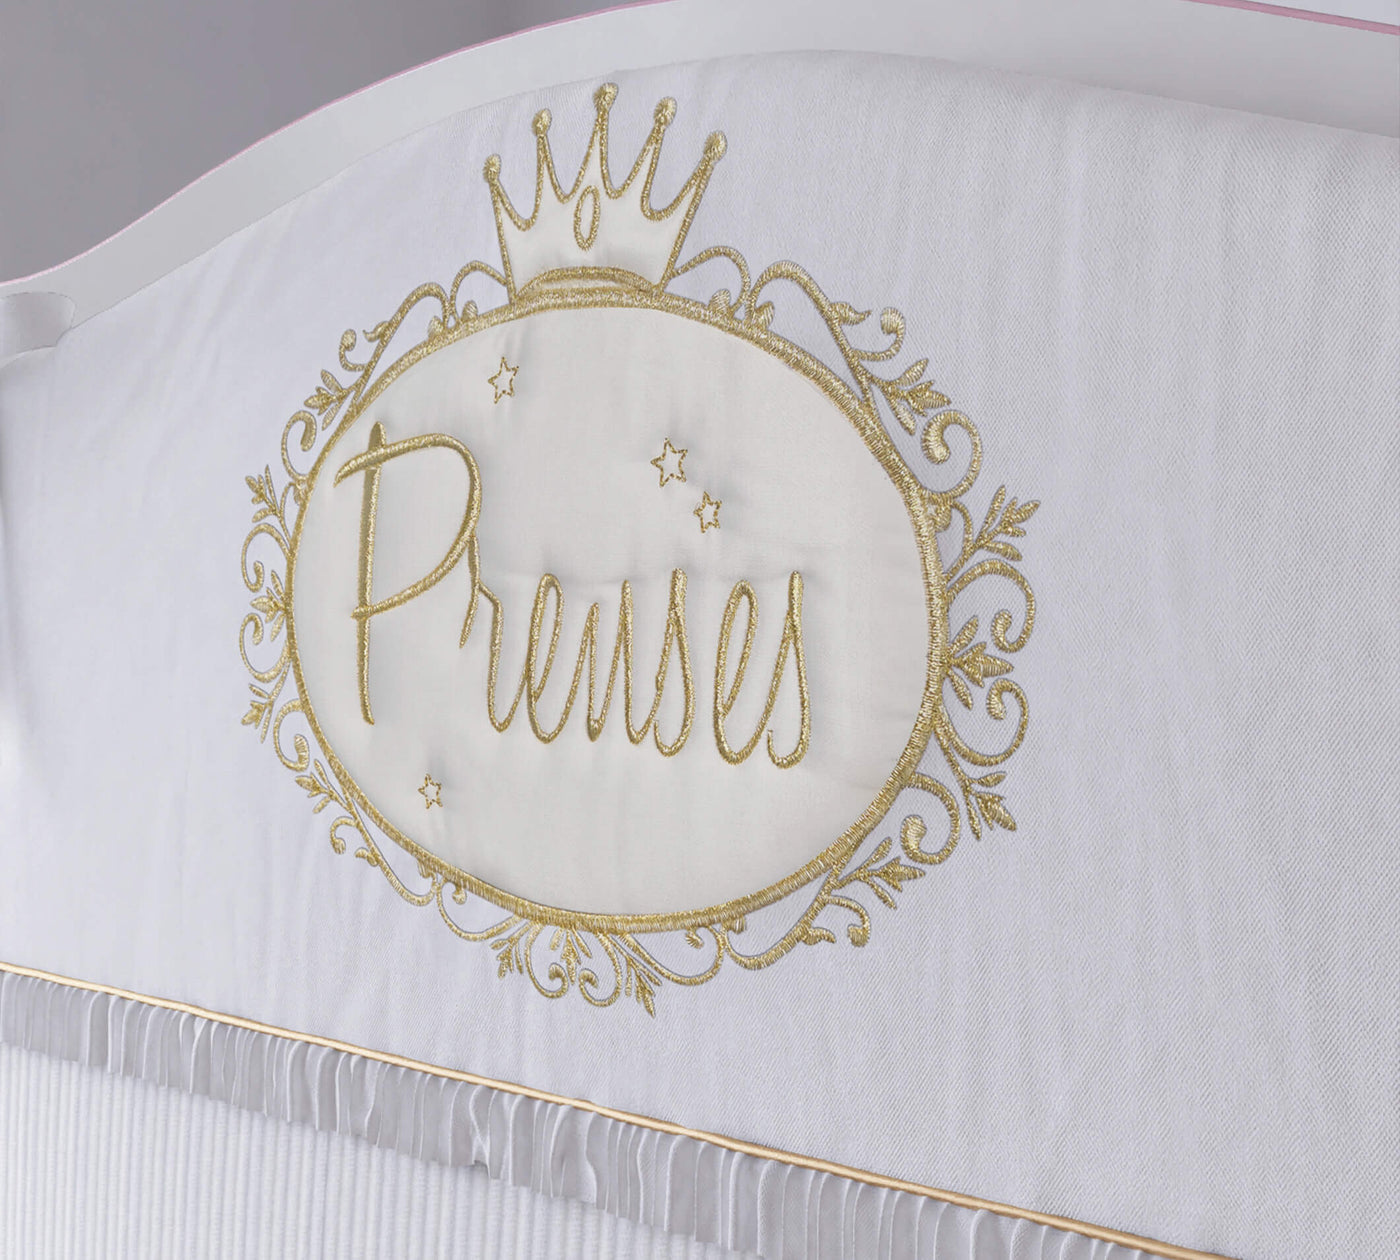 Princess Baby Bedding Set (70x130 cm)